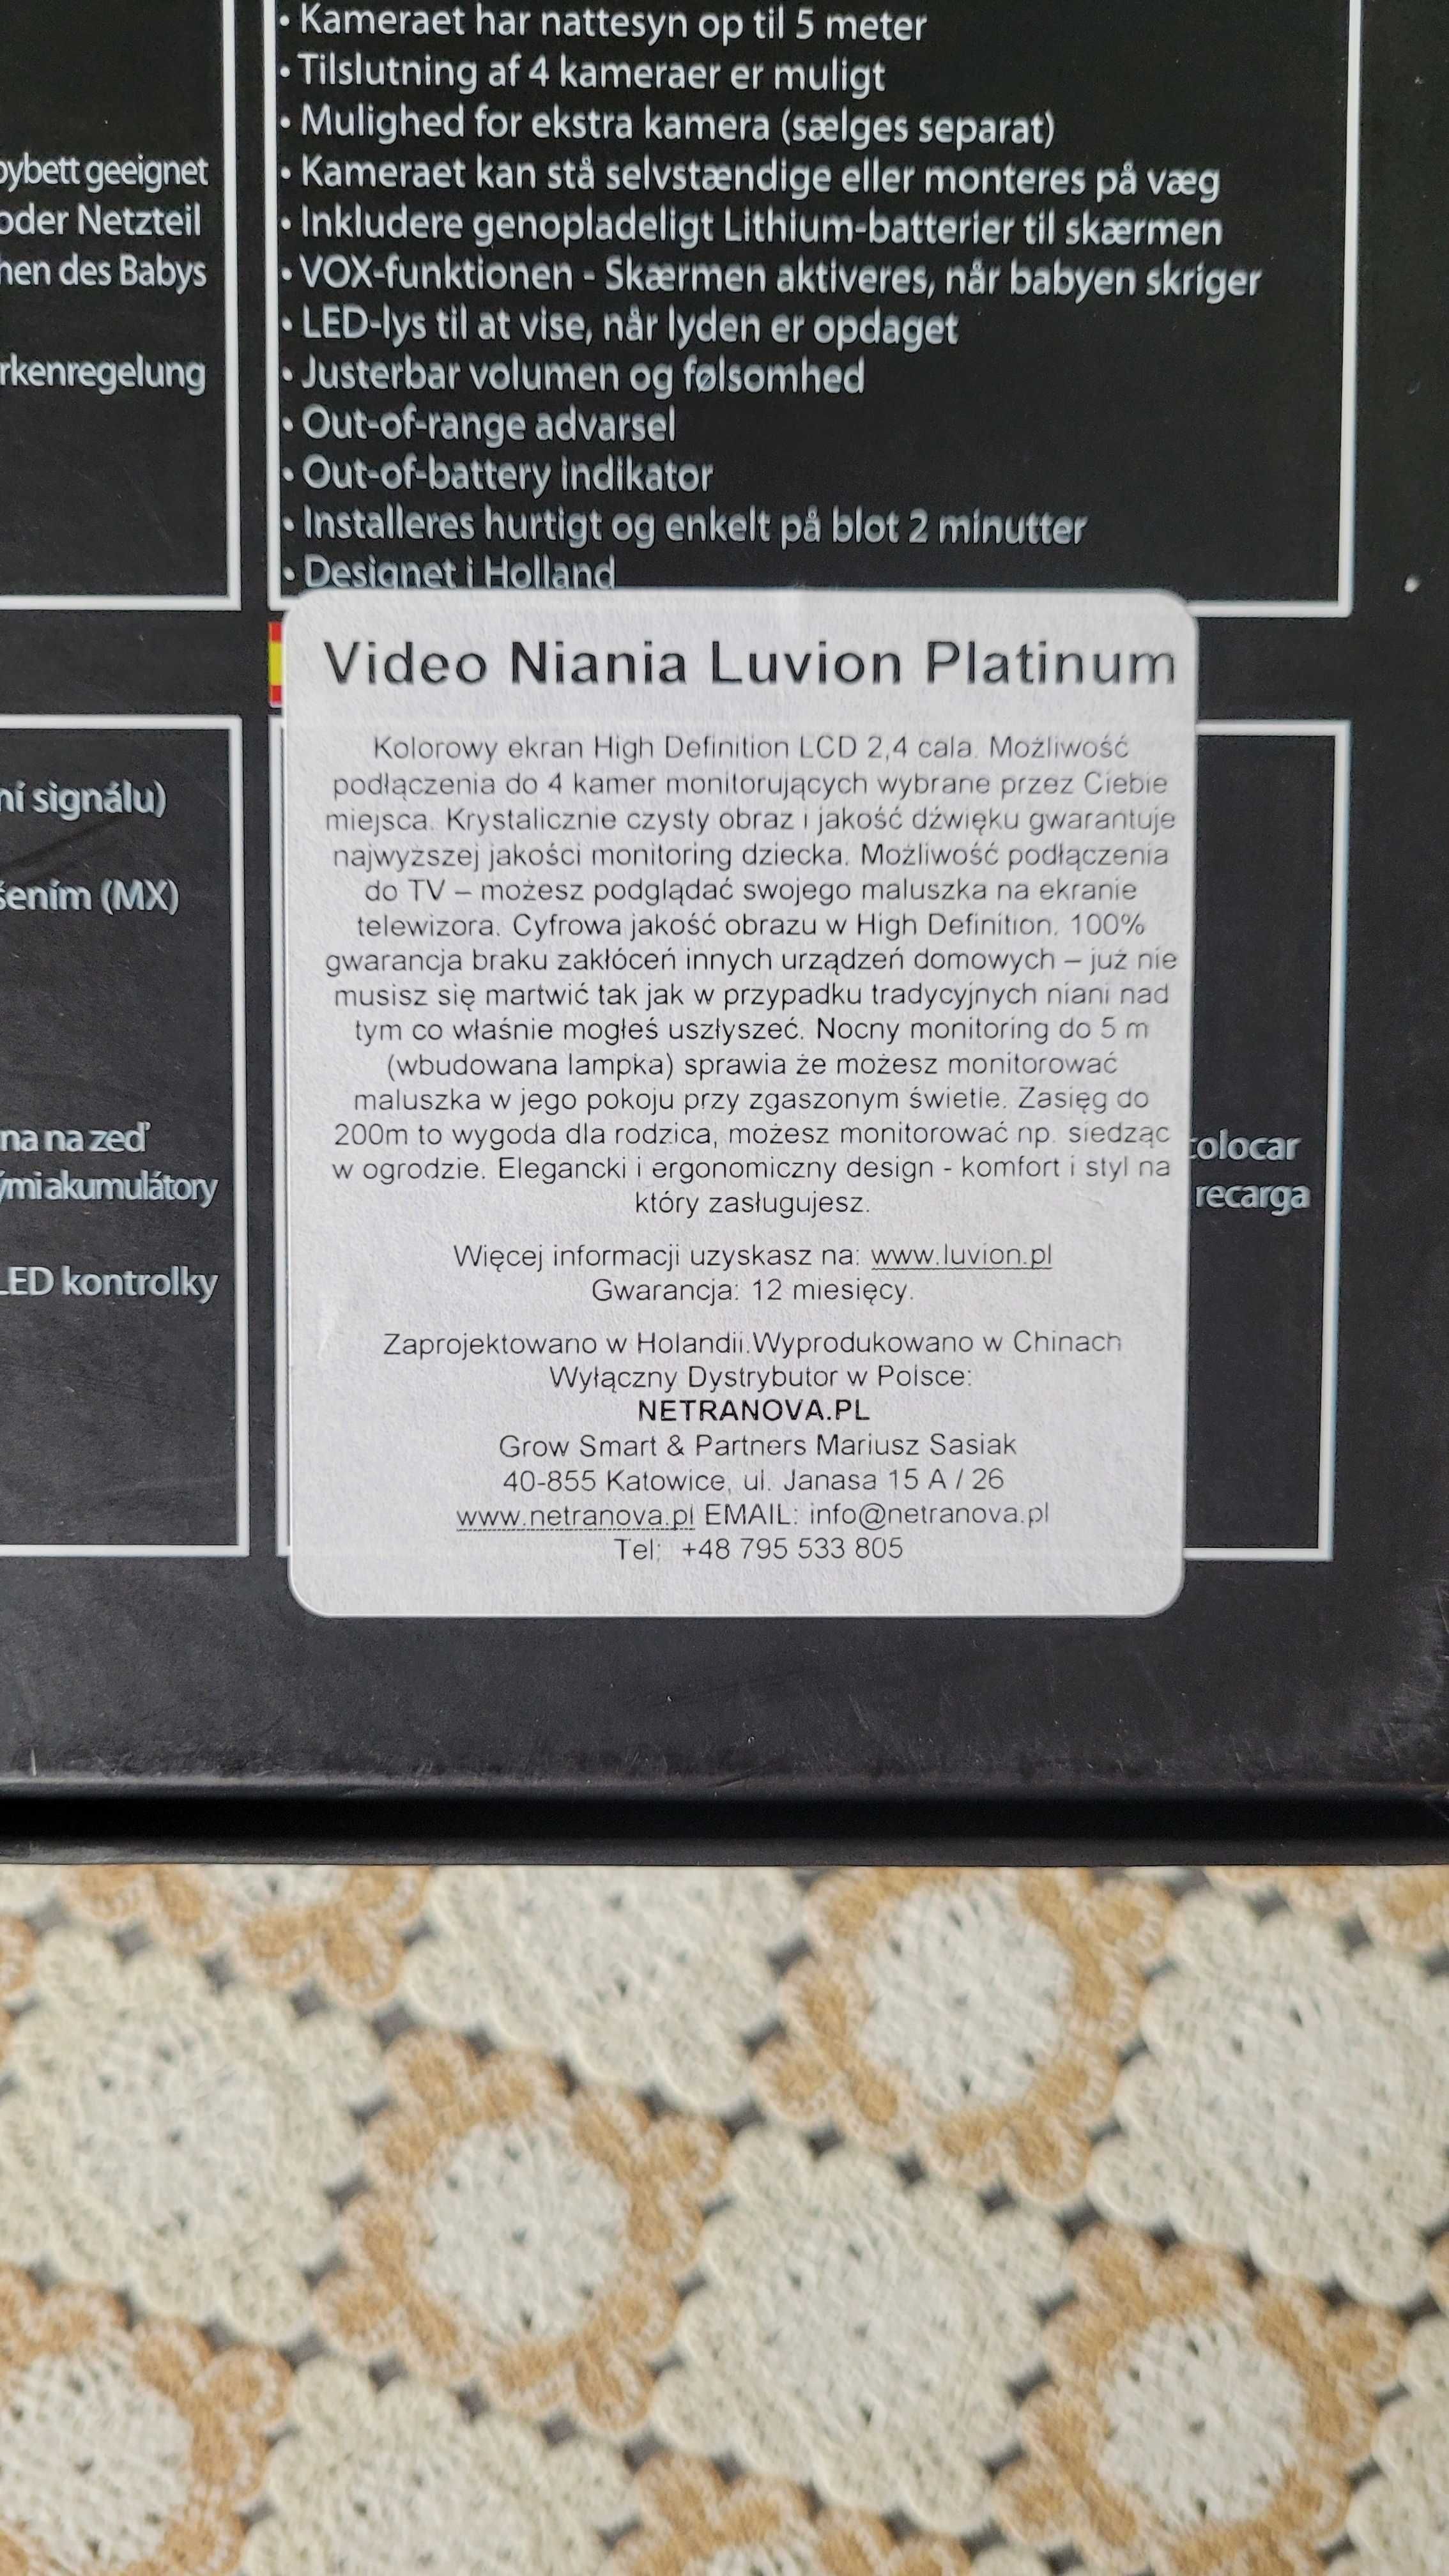 Video Niania Luvion Platinum - Hicior! PROMOCJA!